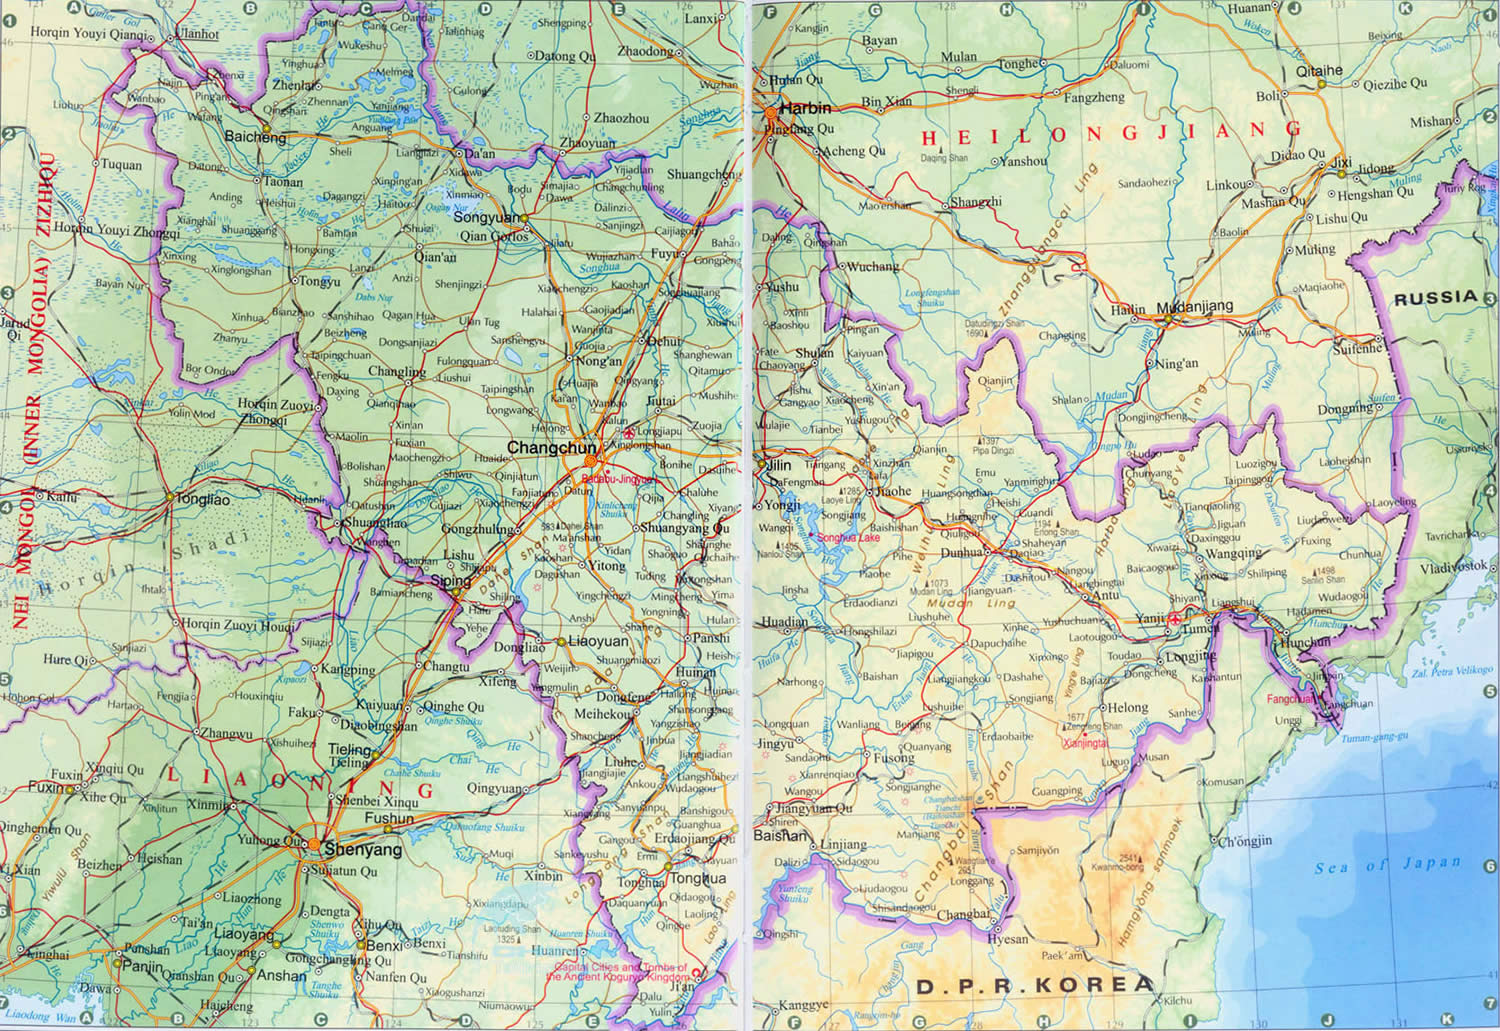 changchun jilin province map